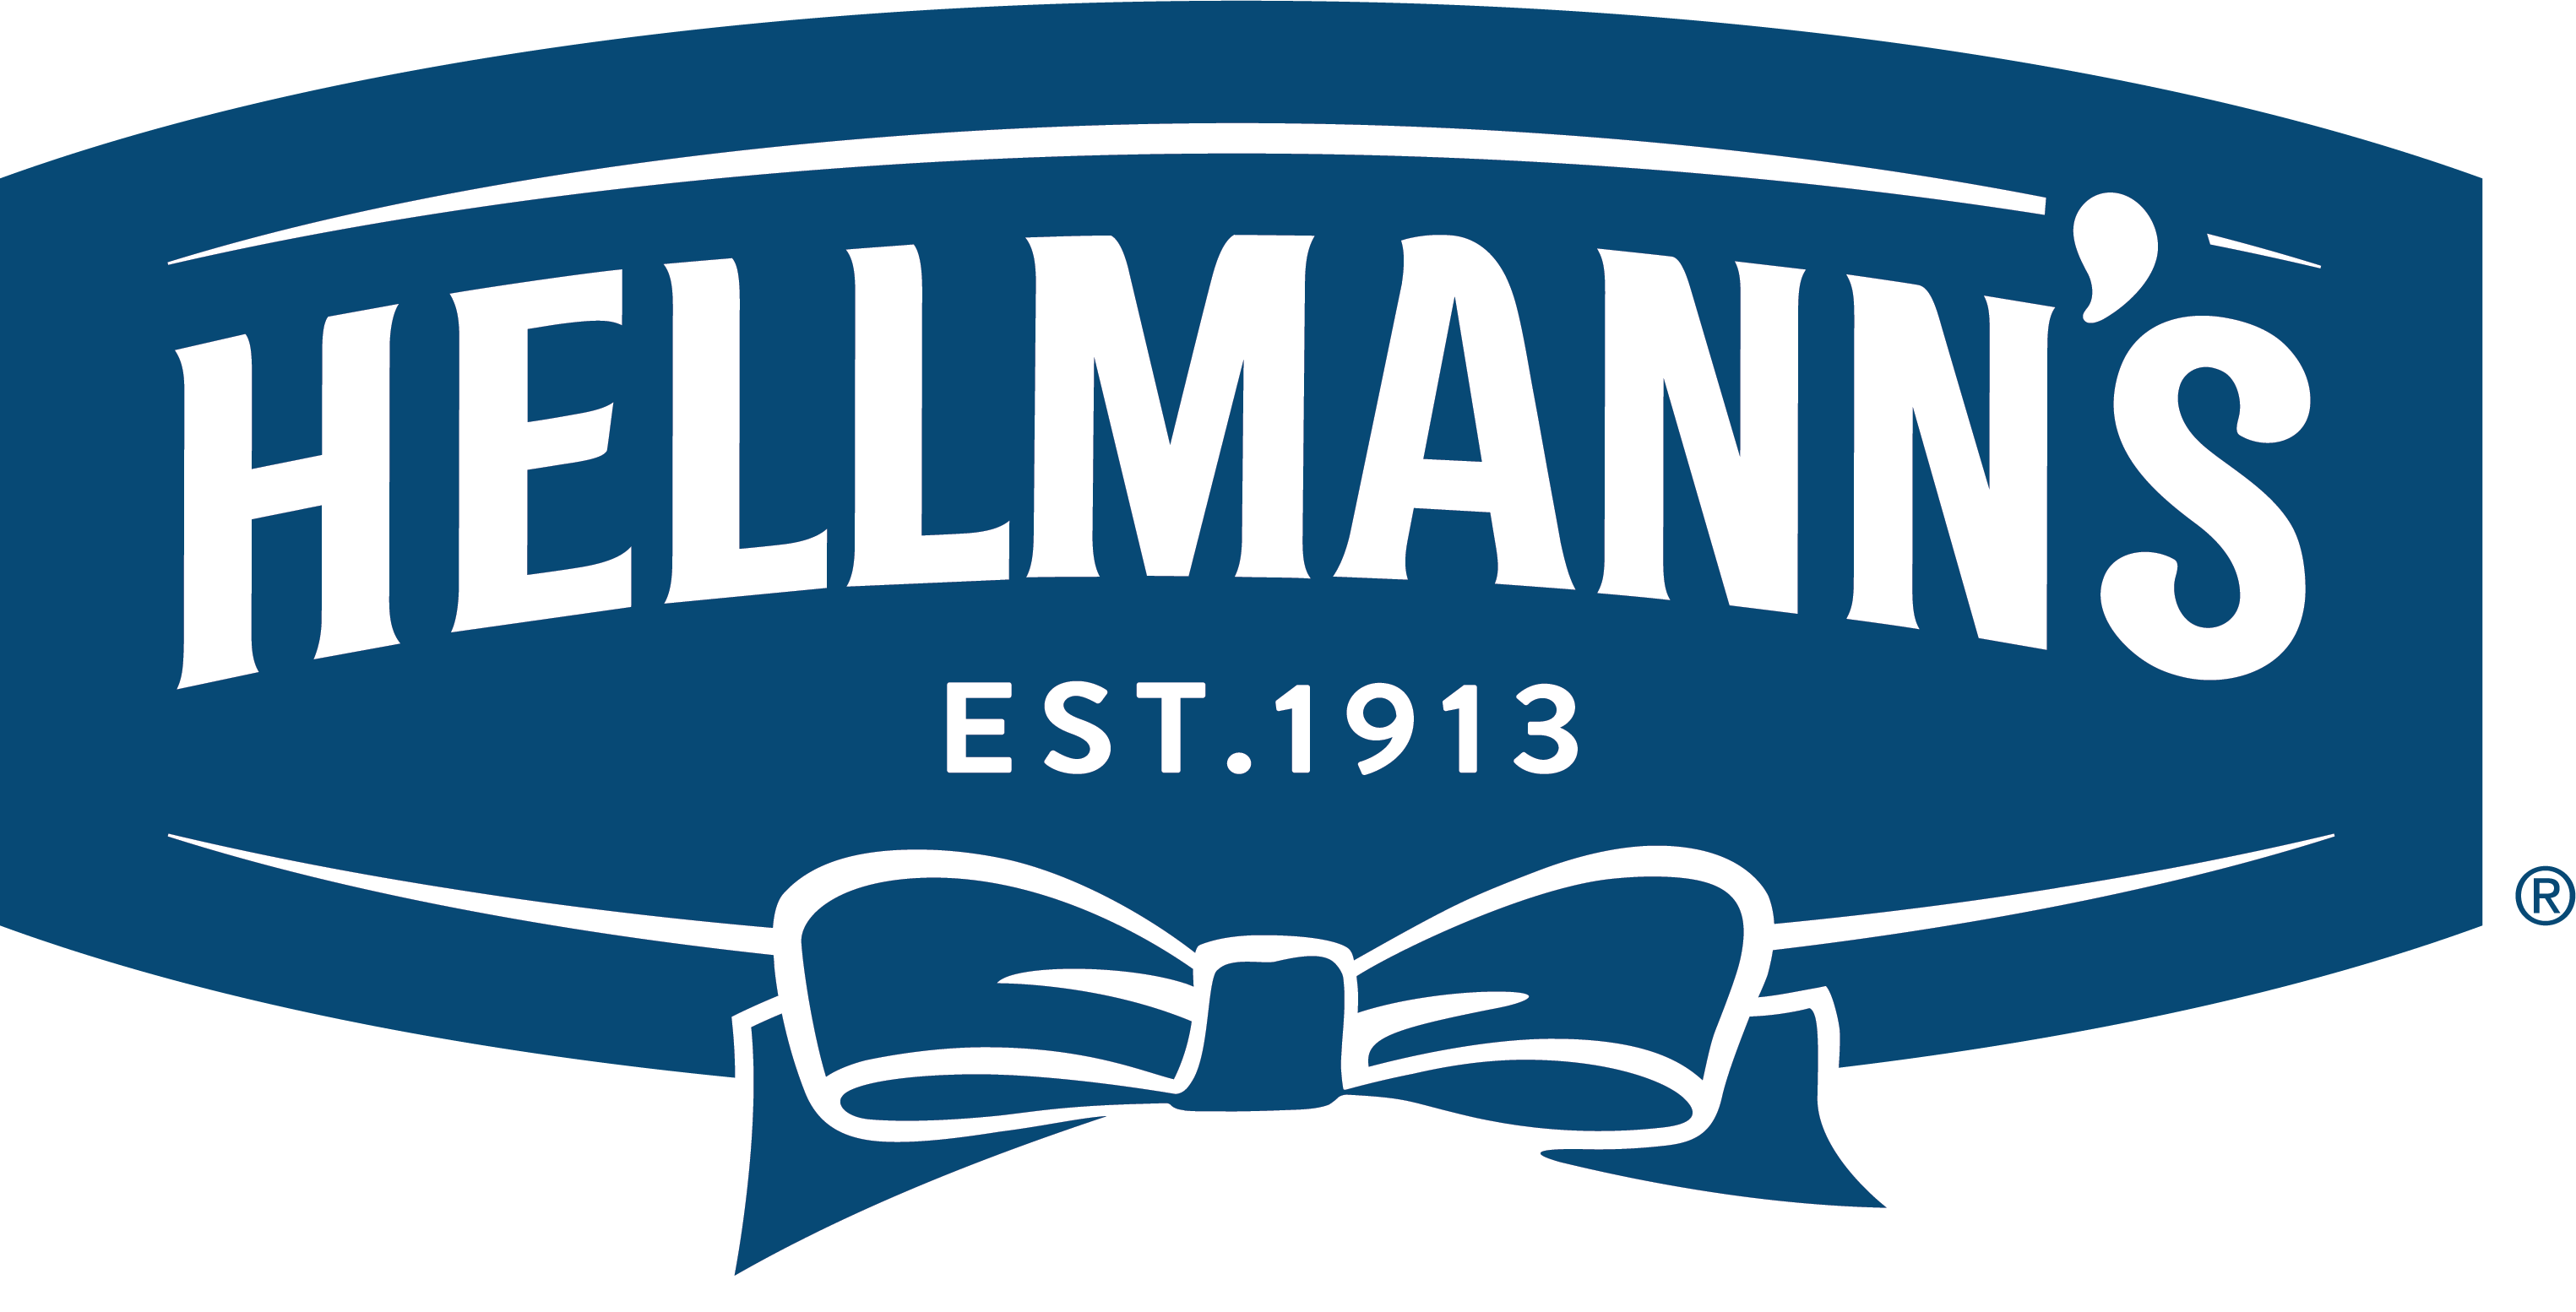 HELLMANNS logo